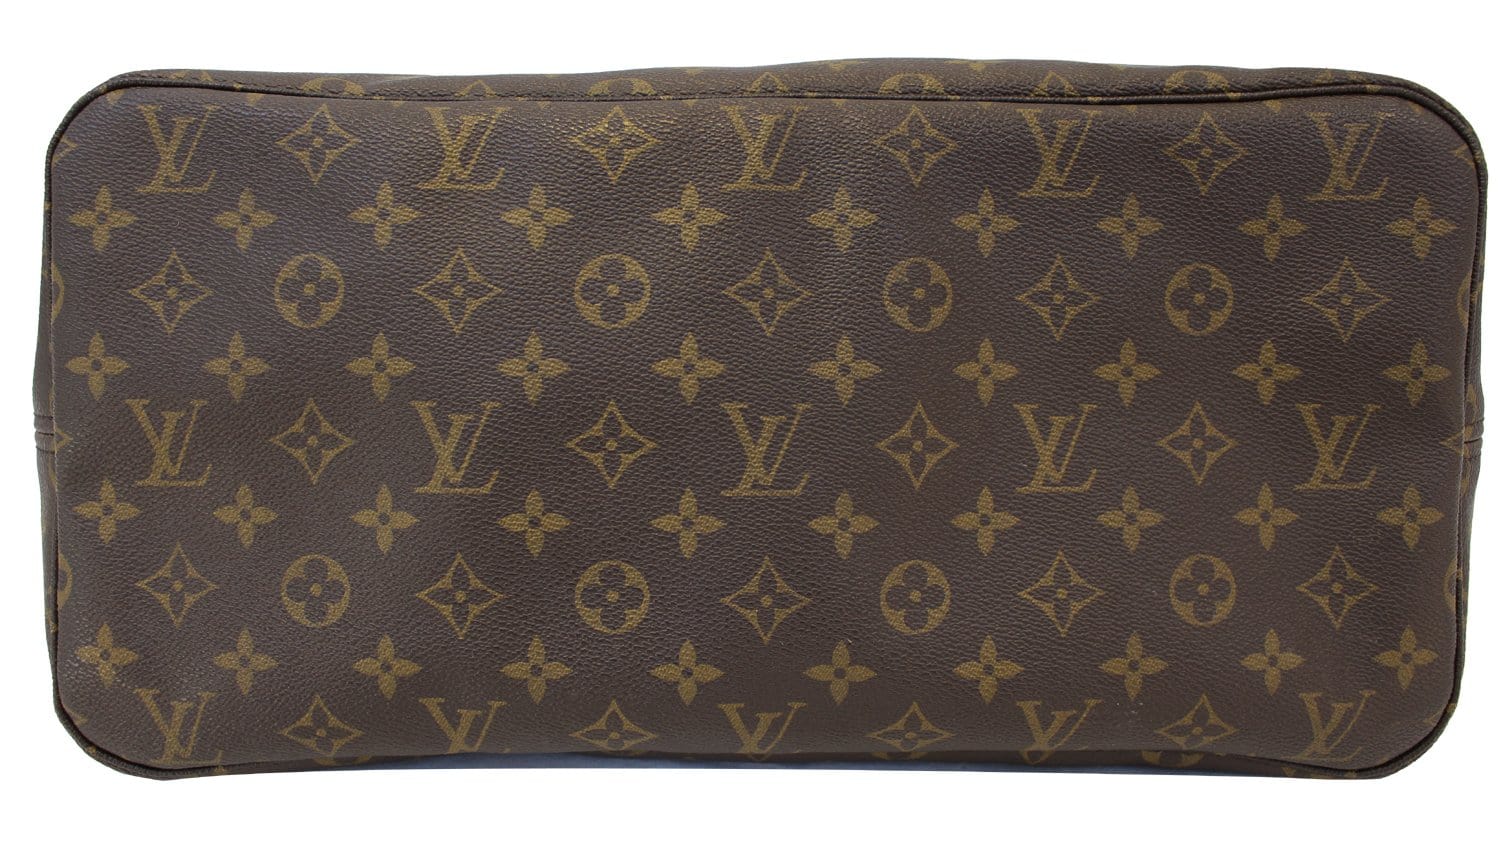 PreOrderAuthentic Louis Vuitton Monogram Neverfull GM Tote Bag